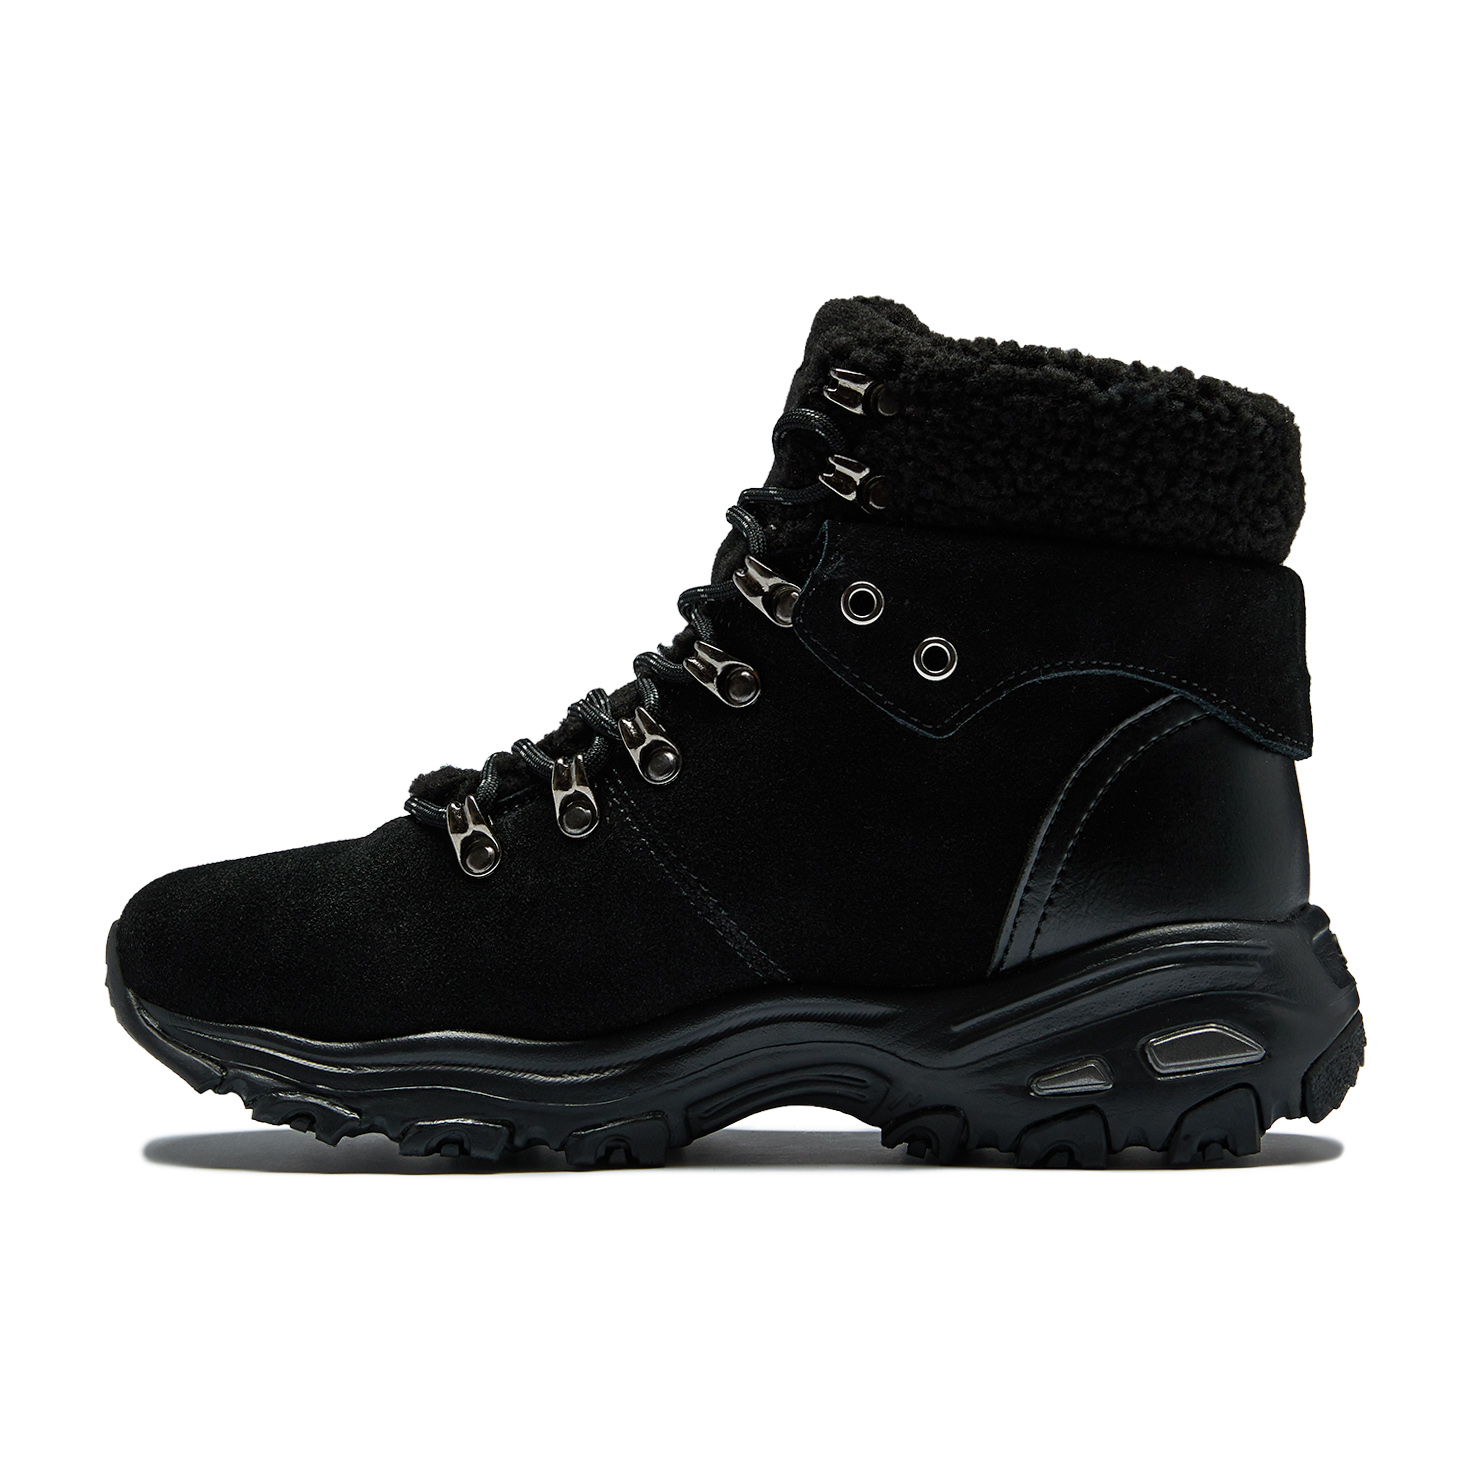 Women's boots SKECHERS, размер 36, цвет черный SK167087 - фото 5